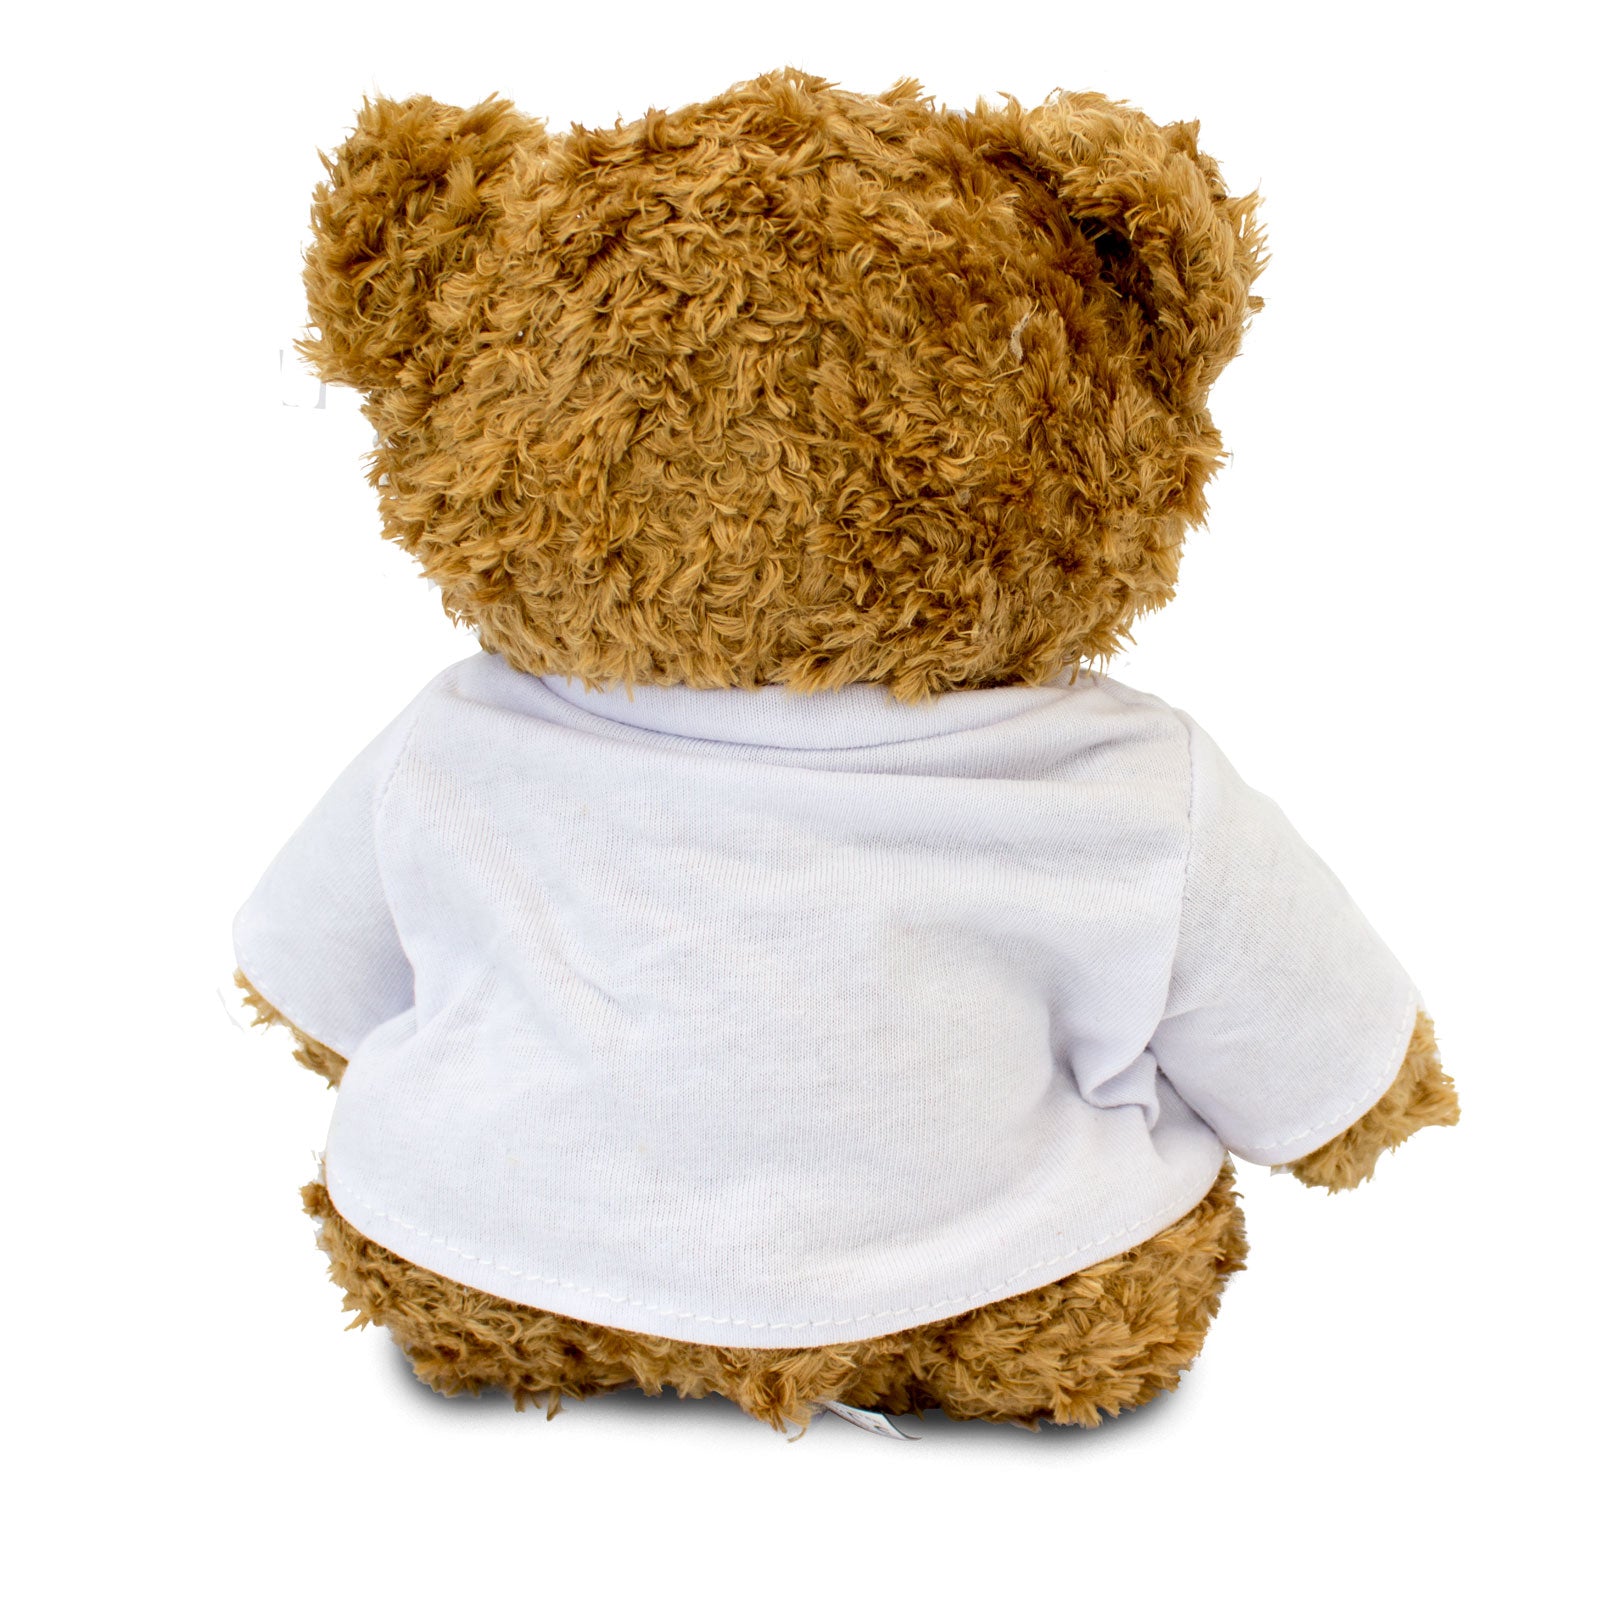 Get Well Soon Amelia - Teddy Bear